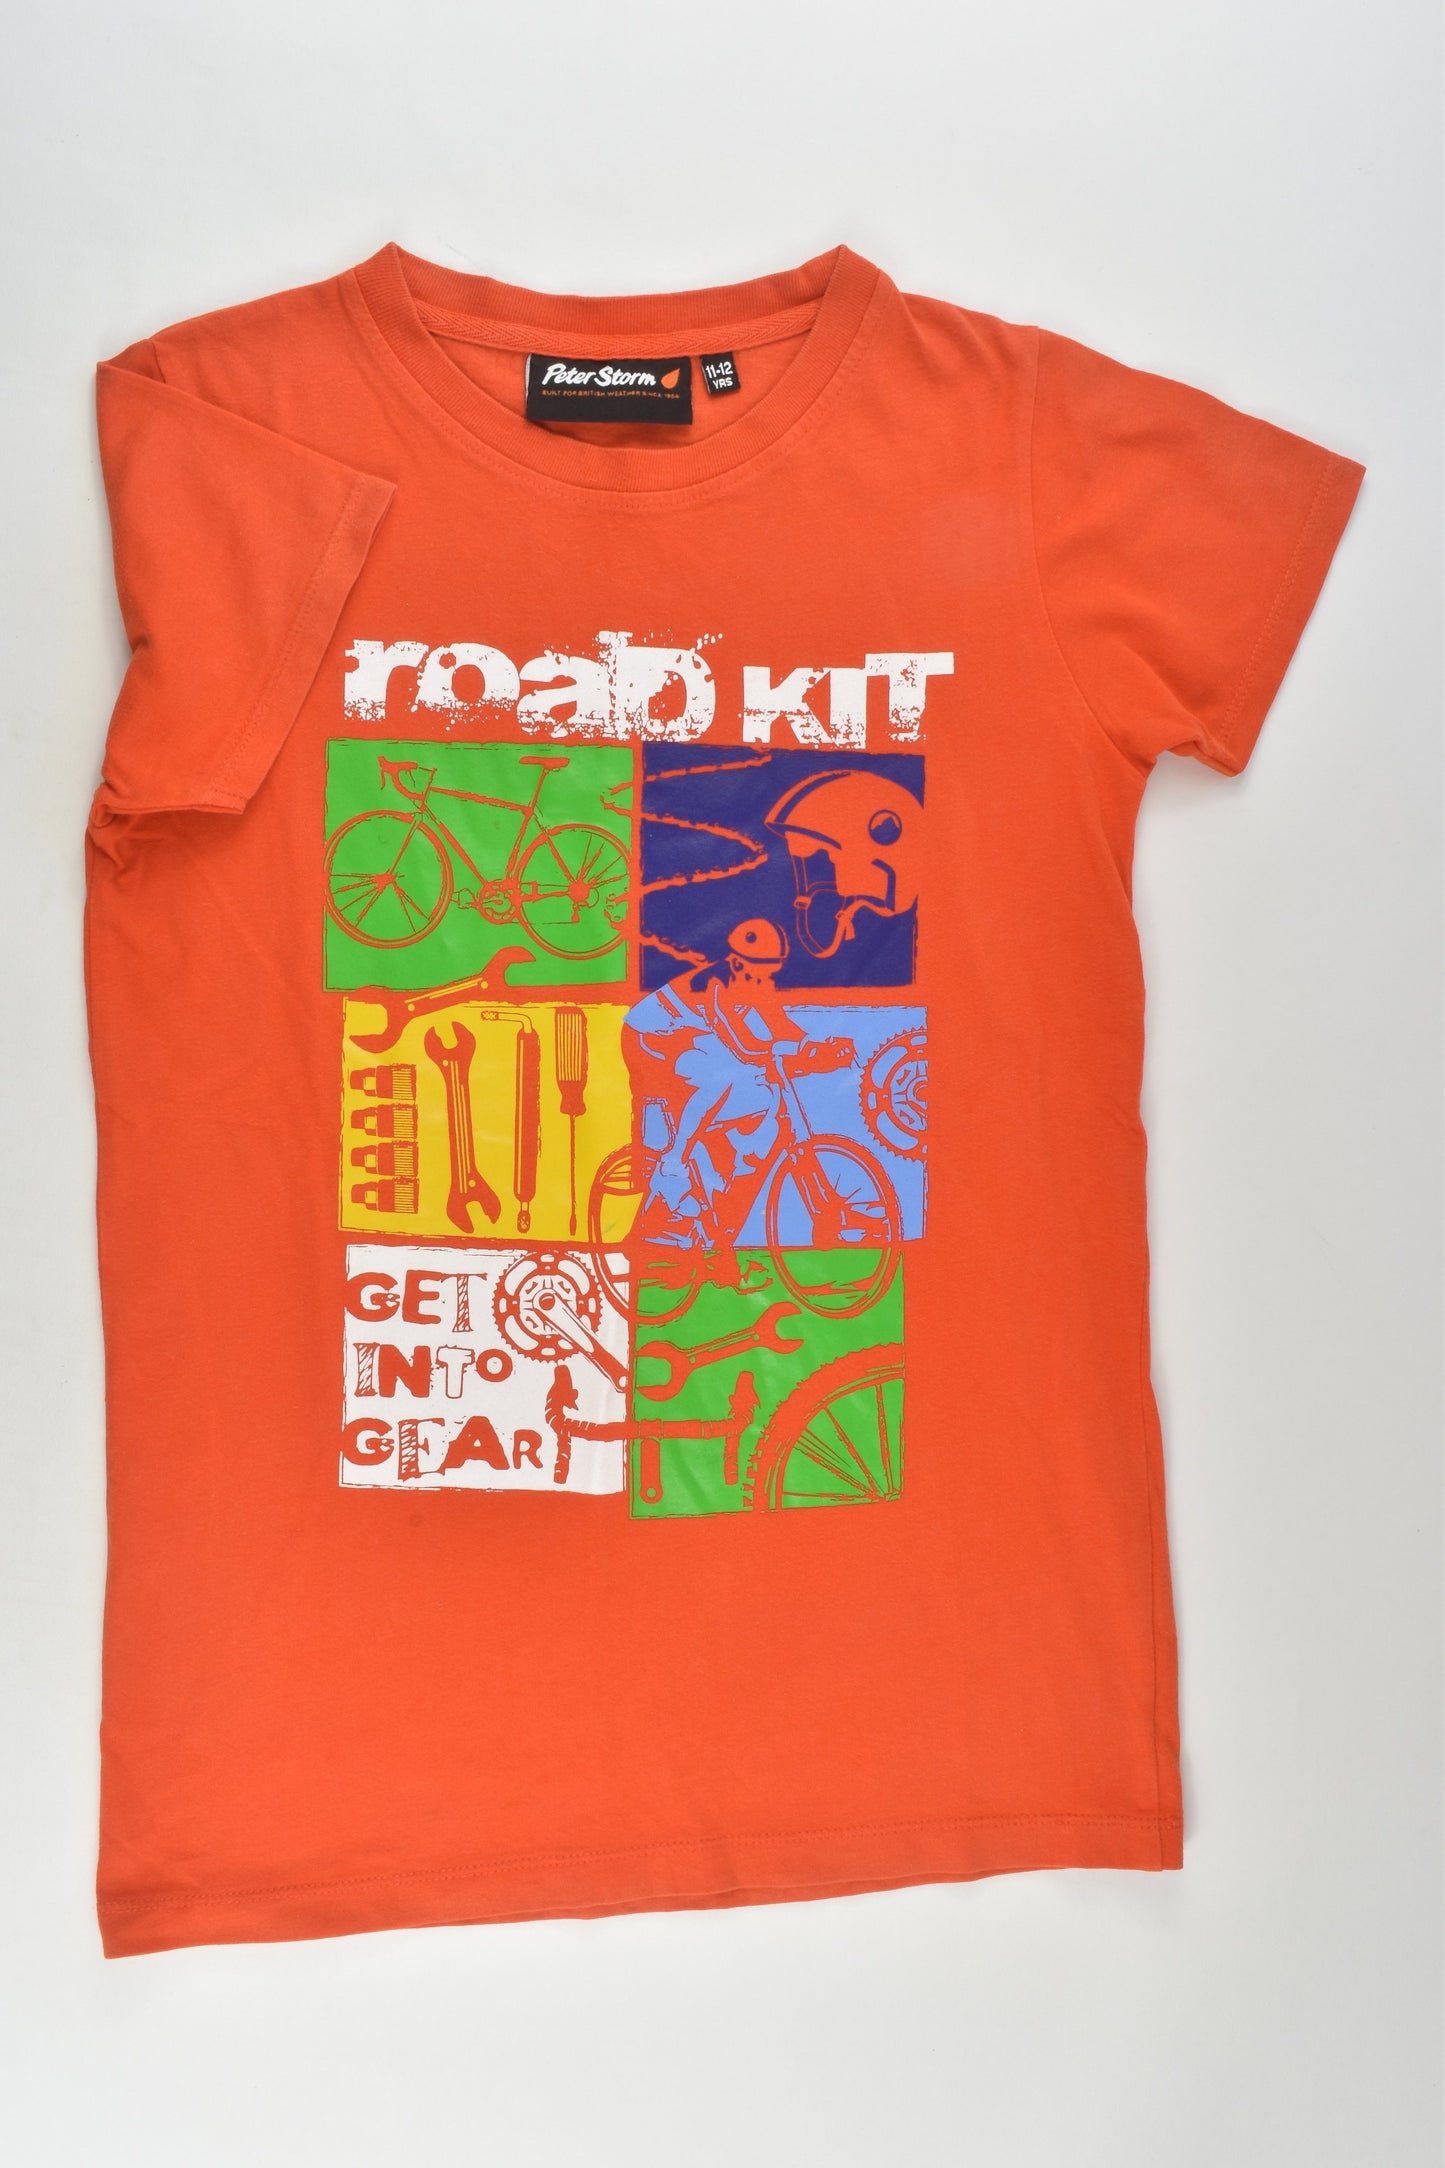 Peter Storm Size 11-12 'Road Kit' T-shirt